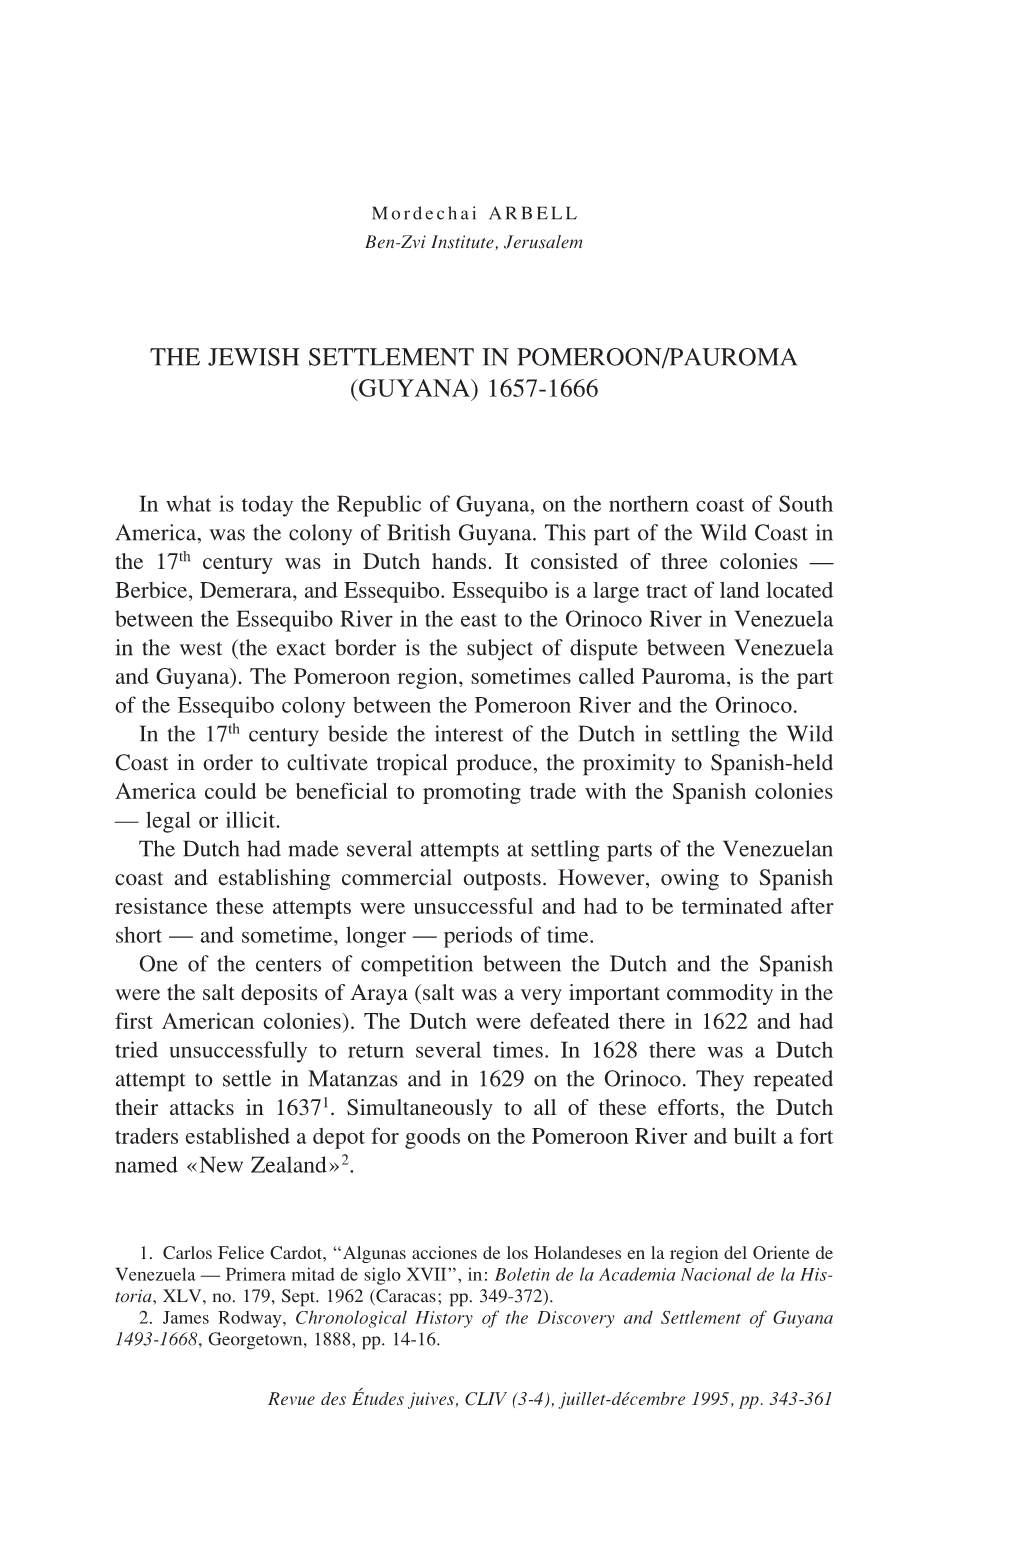 The Jewish Settlement in Pomeroon/Pauroma (Guyana) 1657-1666